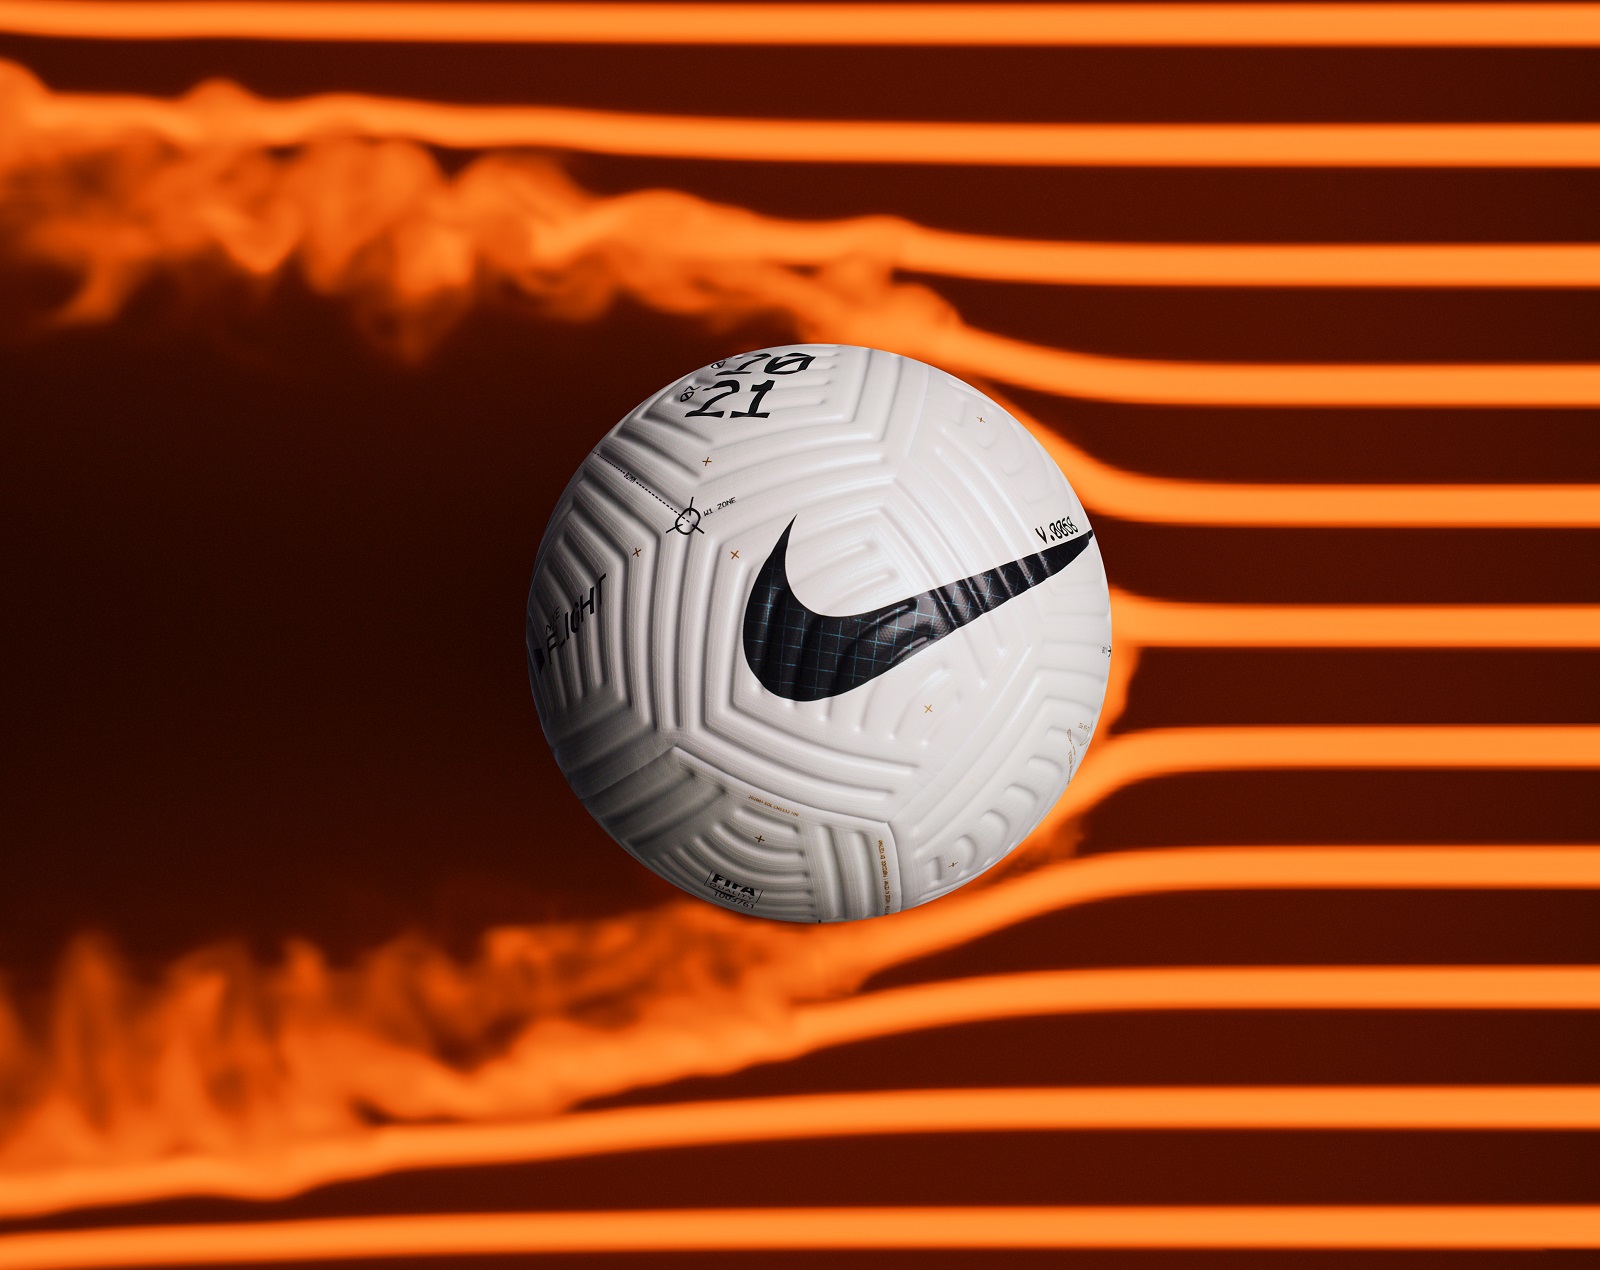 Nike Flight Soccer Ball In Action